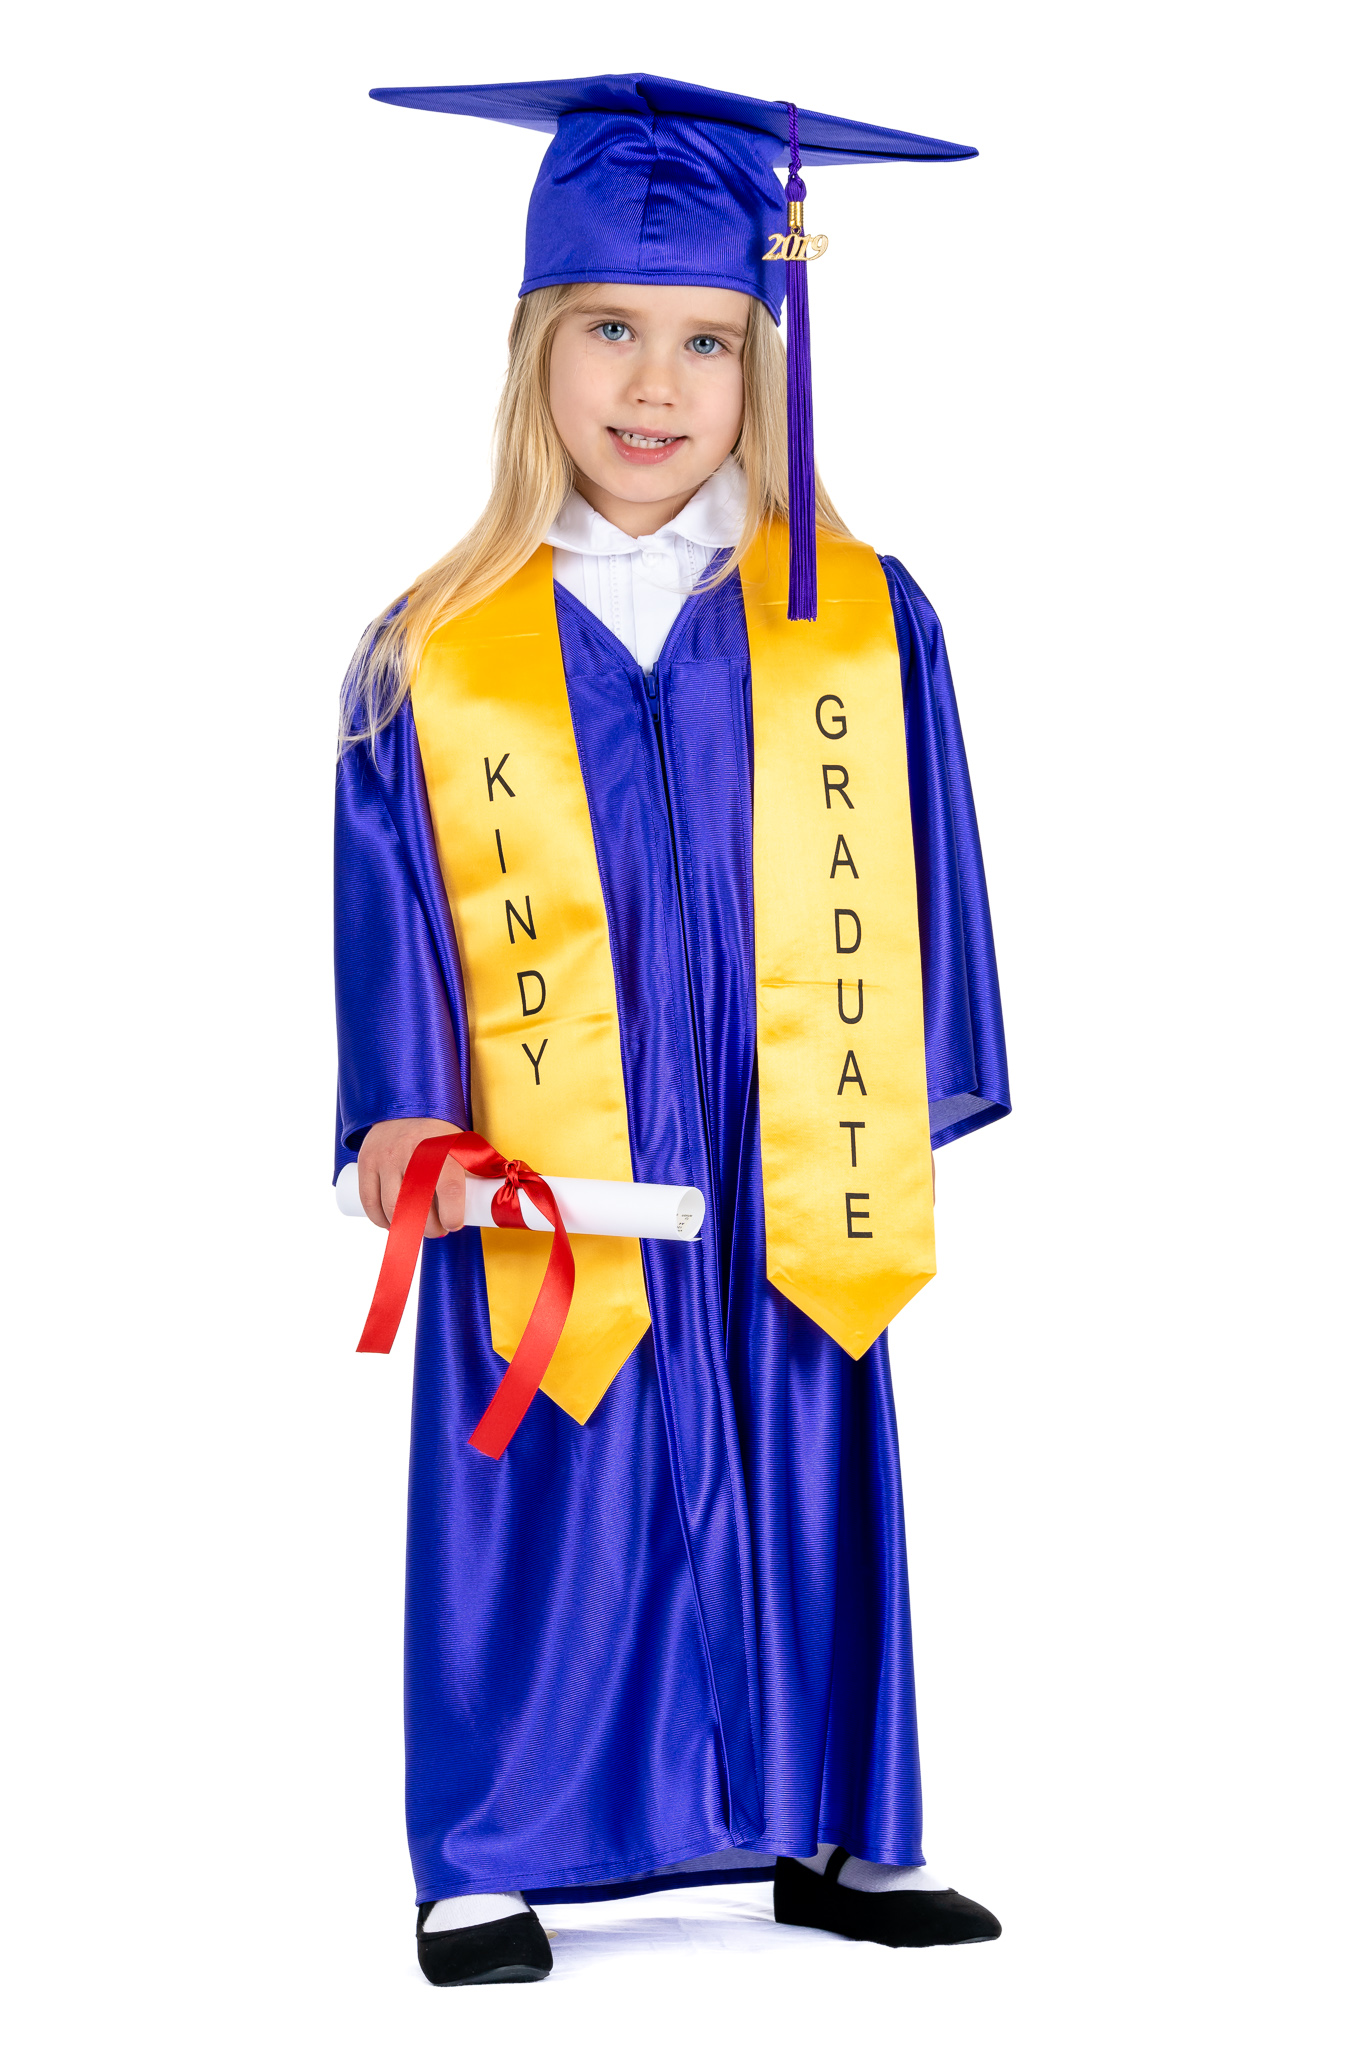 Details about   Children's Preschool Primary School Graduation Gown Tassel Cap Role Play Costume 